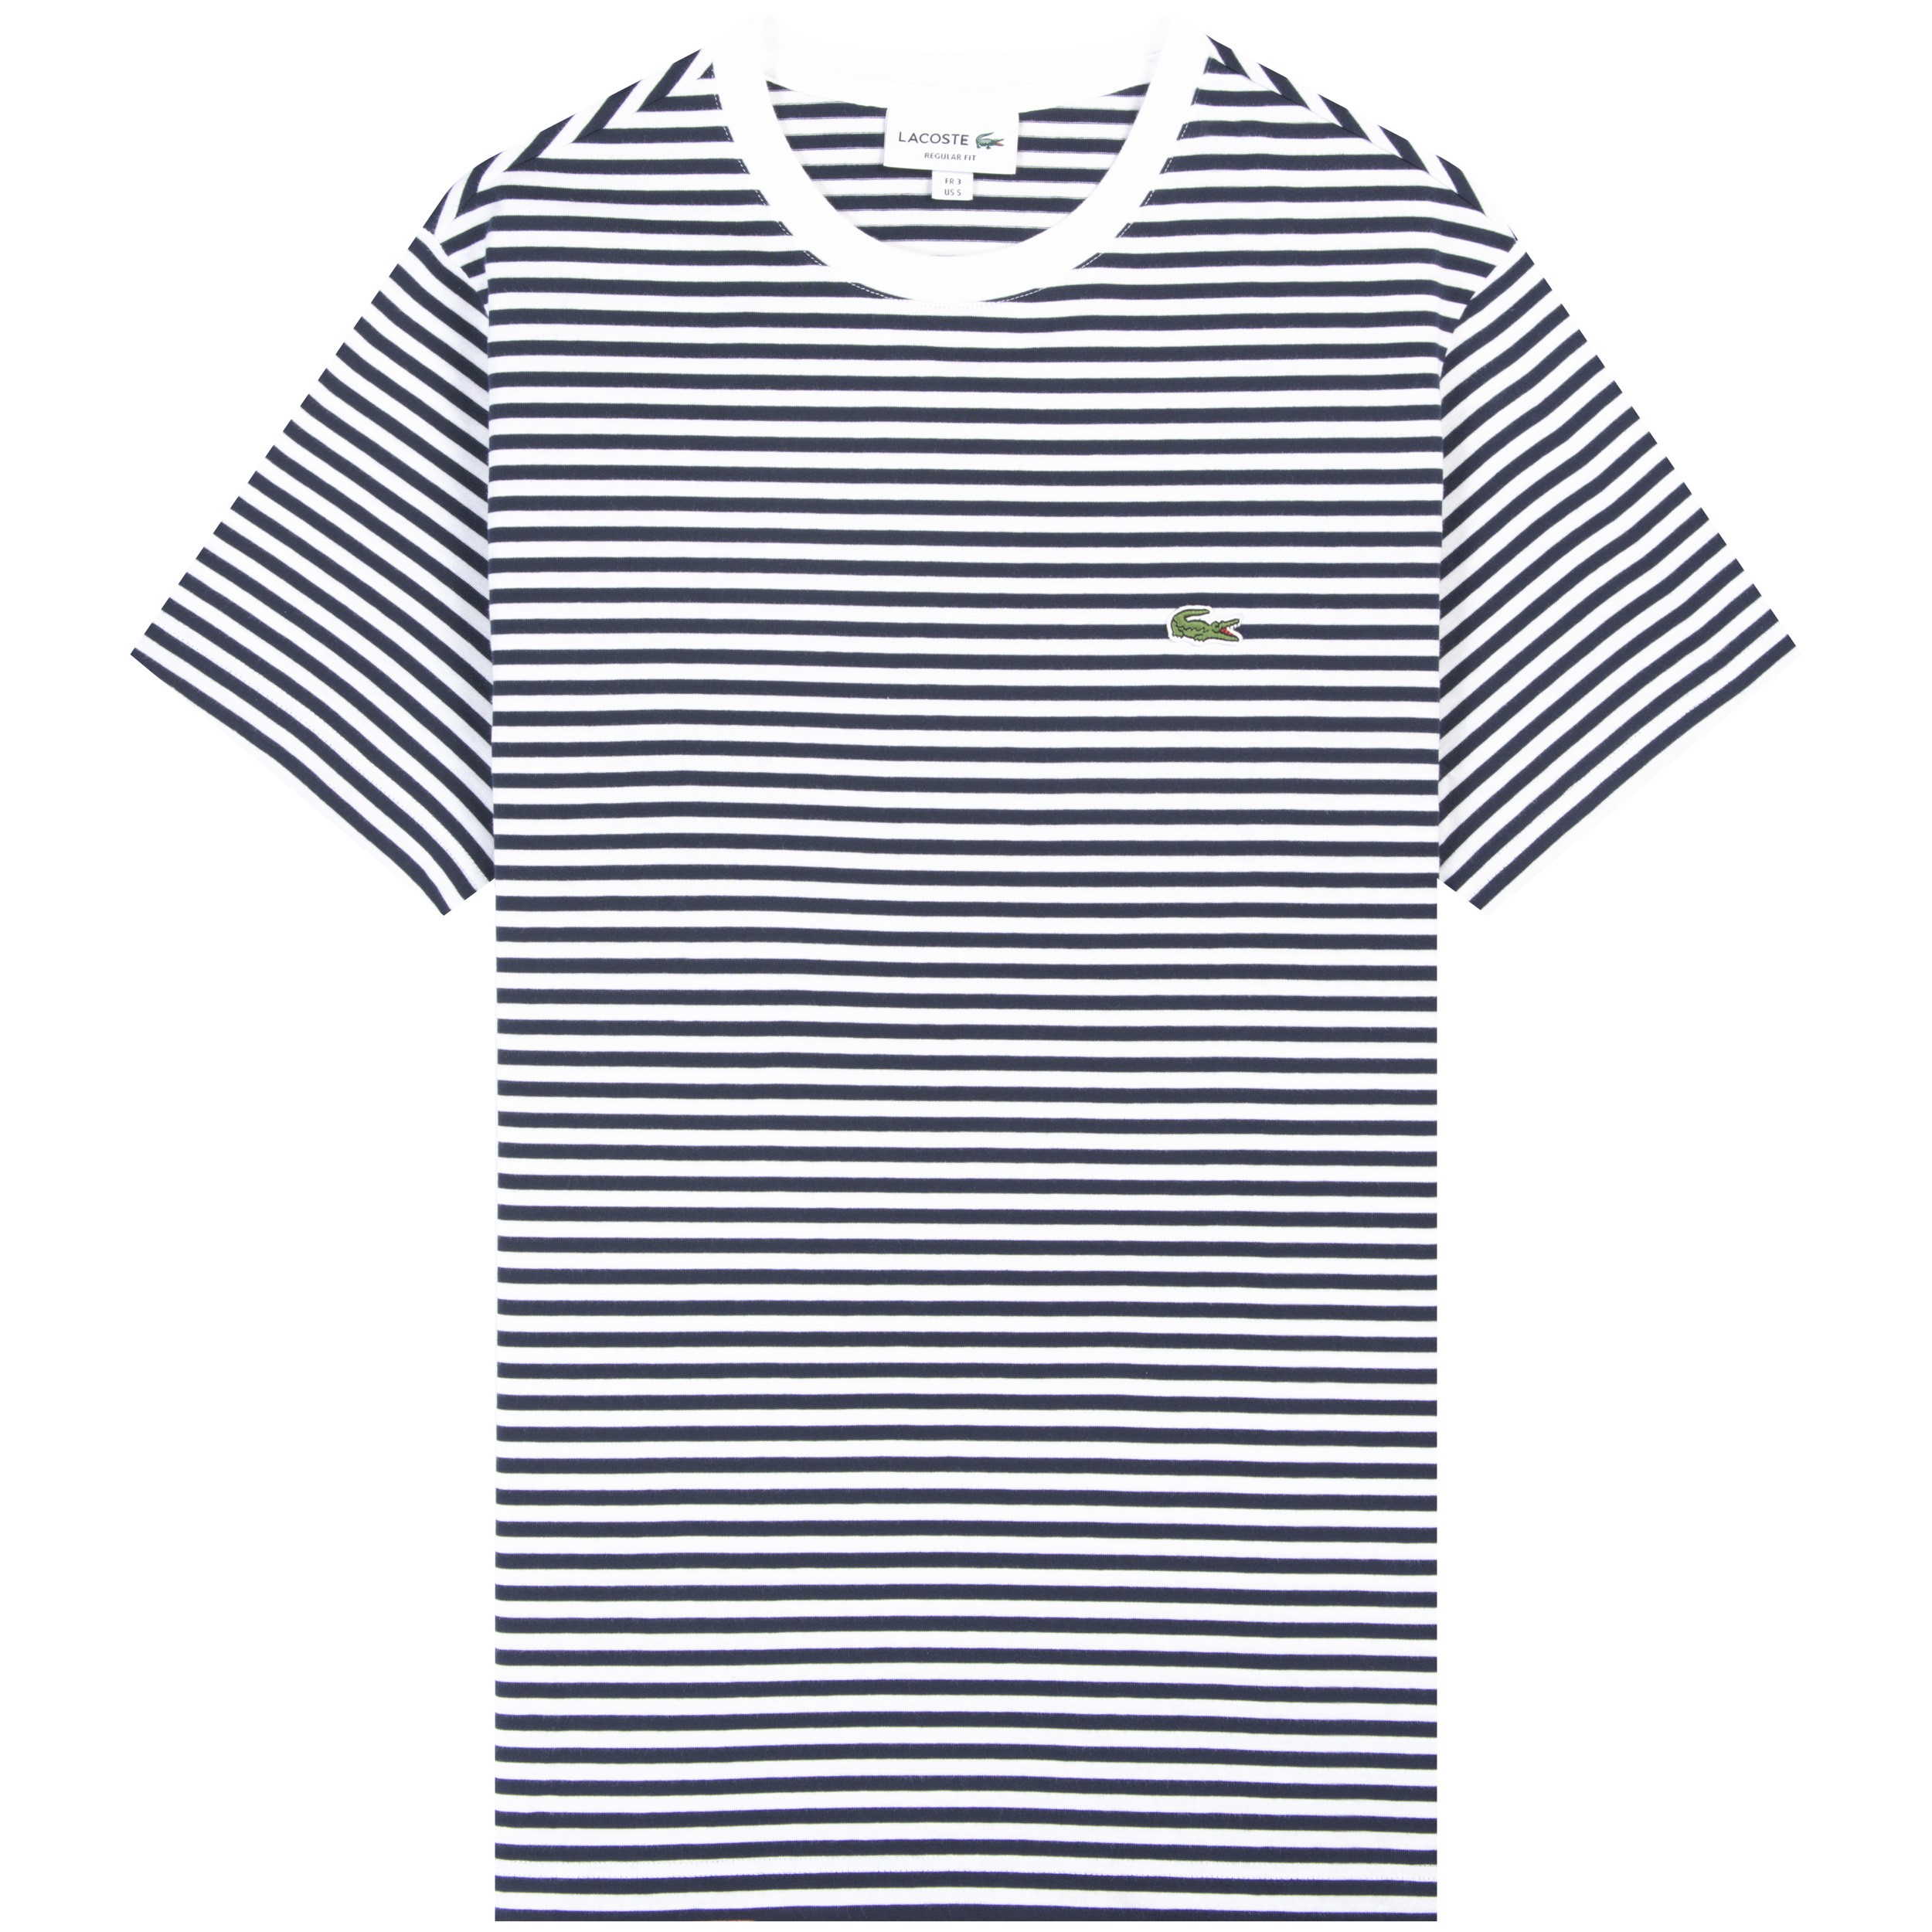 Lacoste 'Crew Neck' Striped T Shirt White/Navy